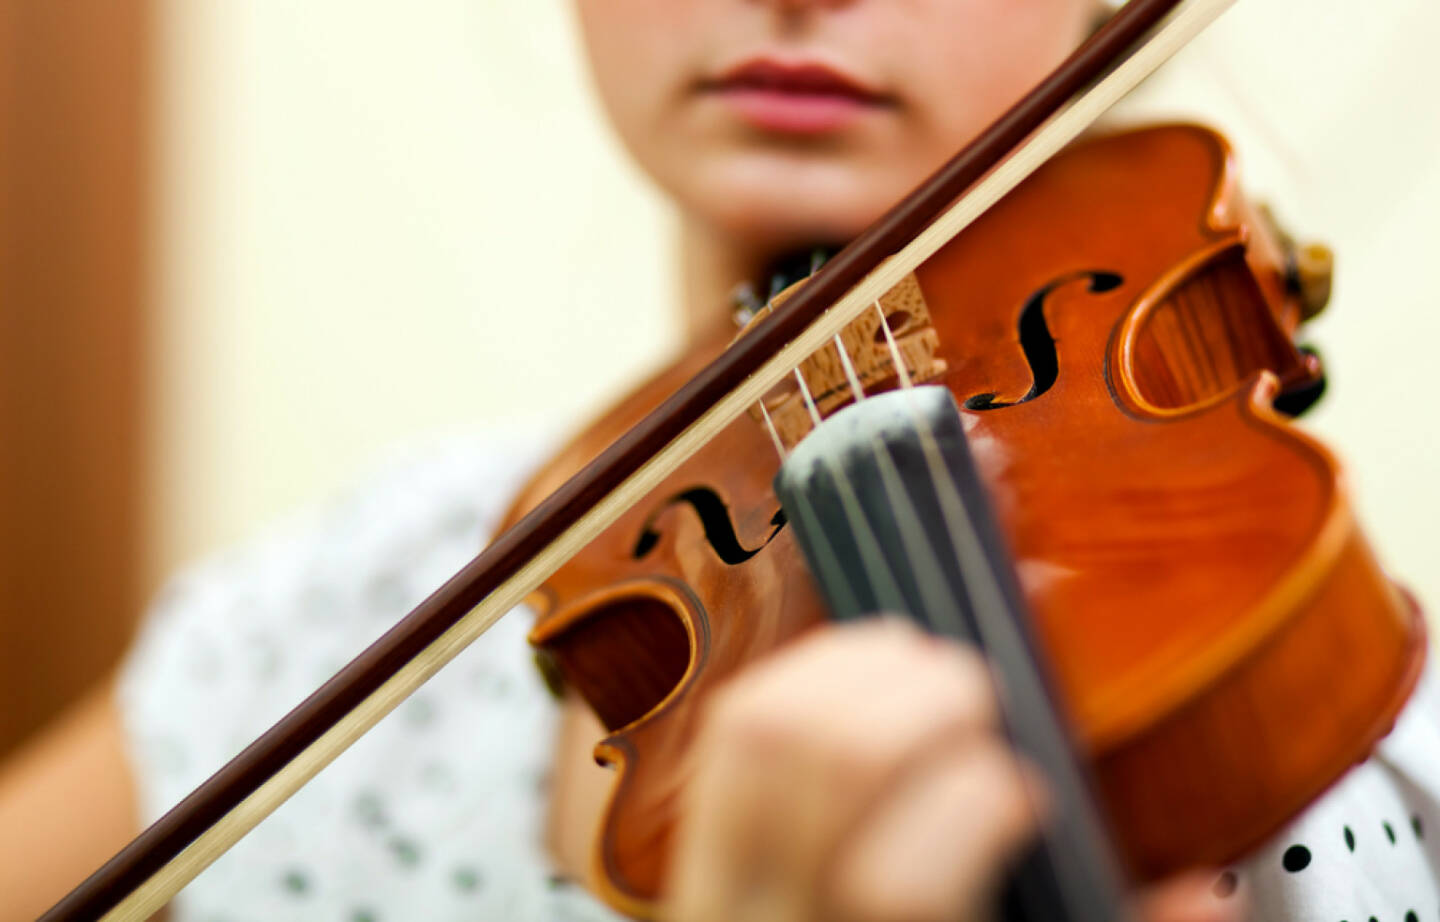 Geige, Geigenspieler, spielen, Bogen, Saite, Violine, http://www.shutterstock.com/de/pic-165366977/stock-photo-young-female-violinist-portrait.html